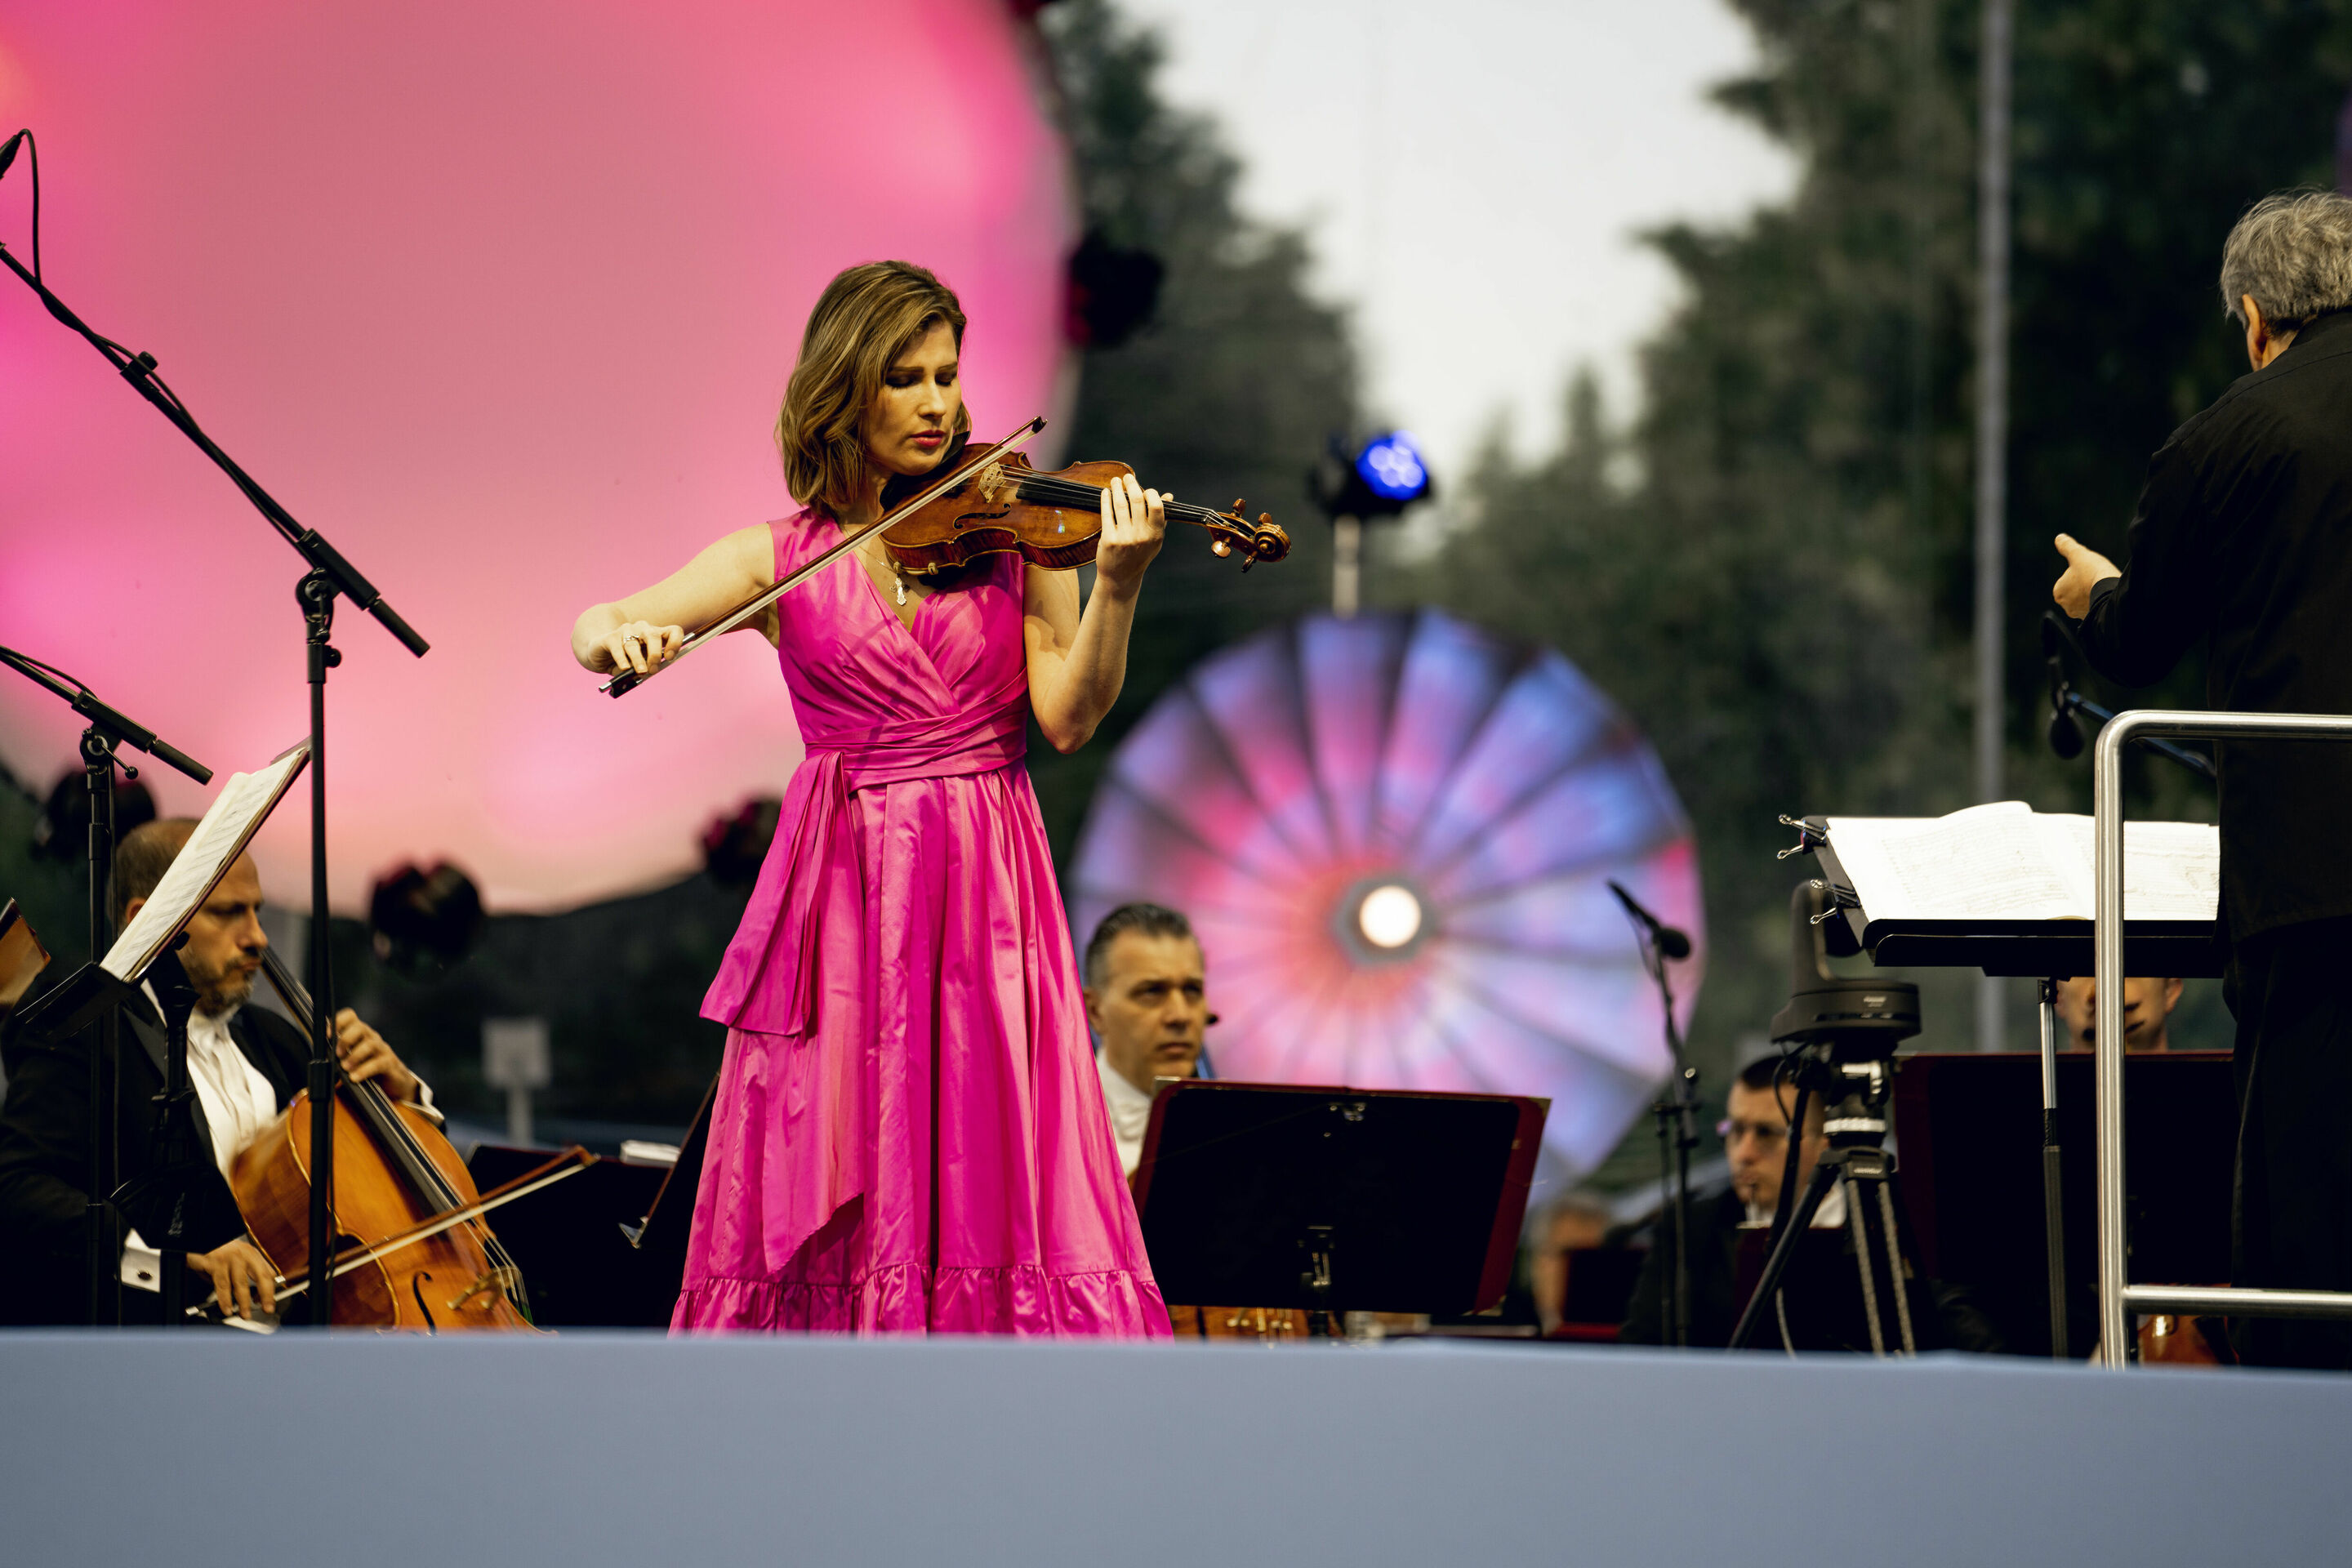 Audi Summer Concerts 2022: Lisa Batiashvili is planning an “inspiring and visionary program“